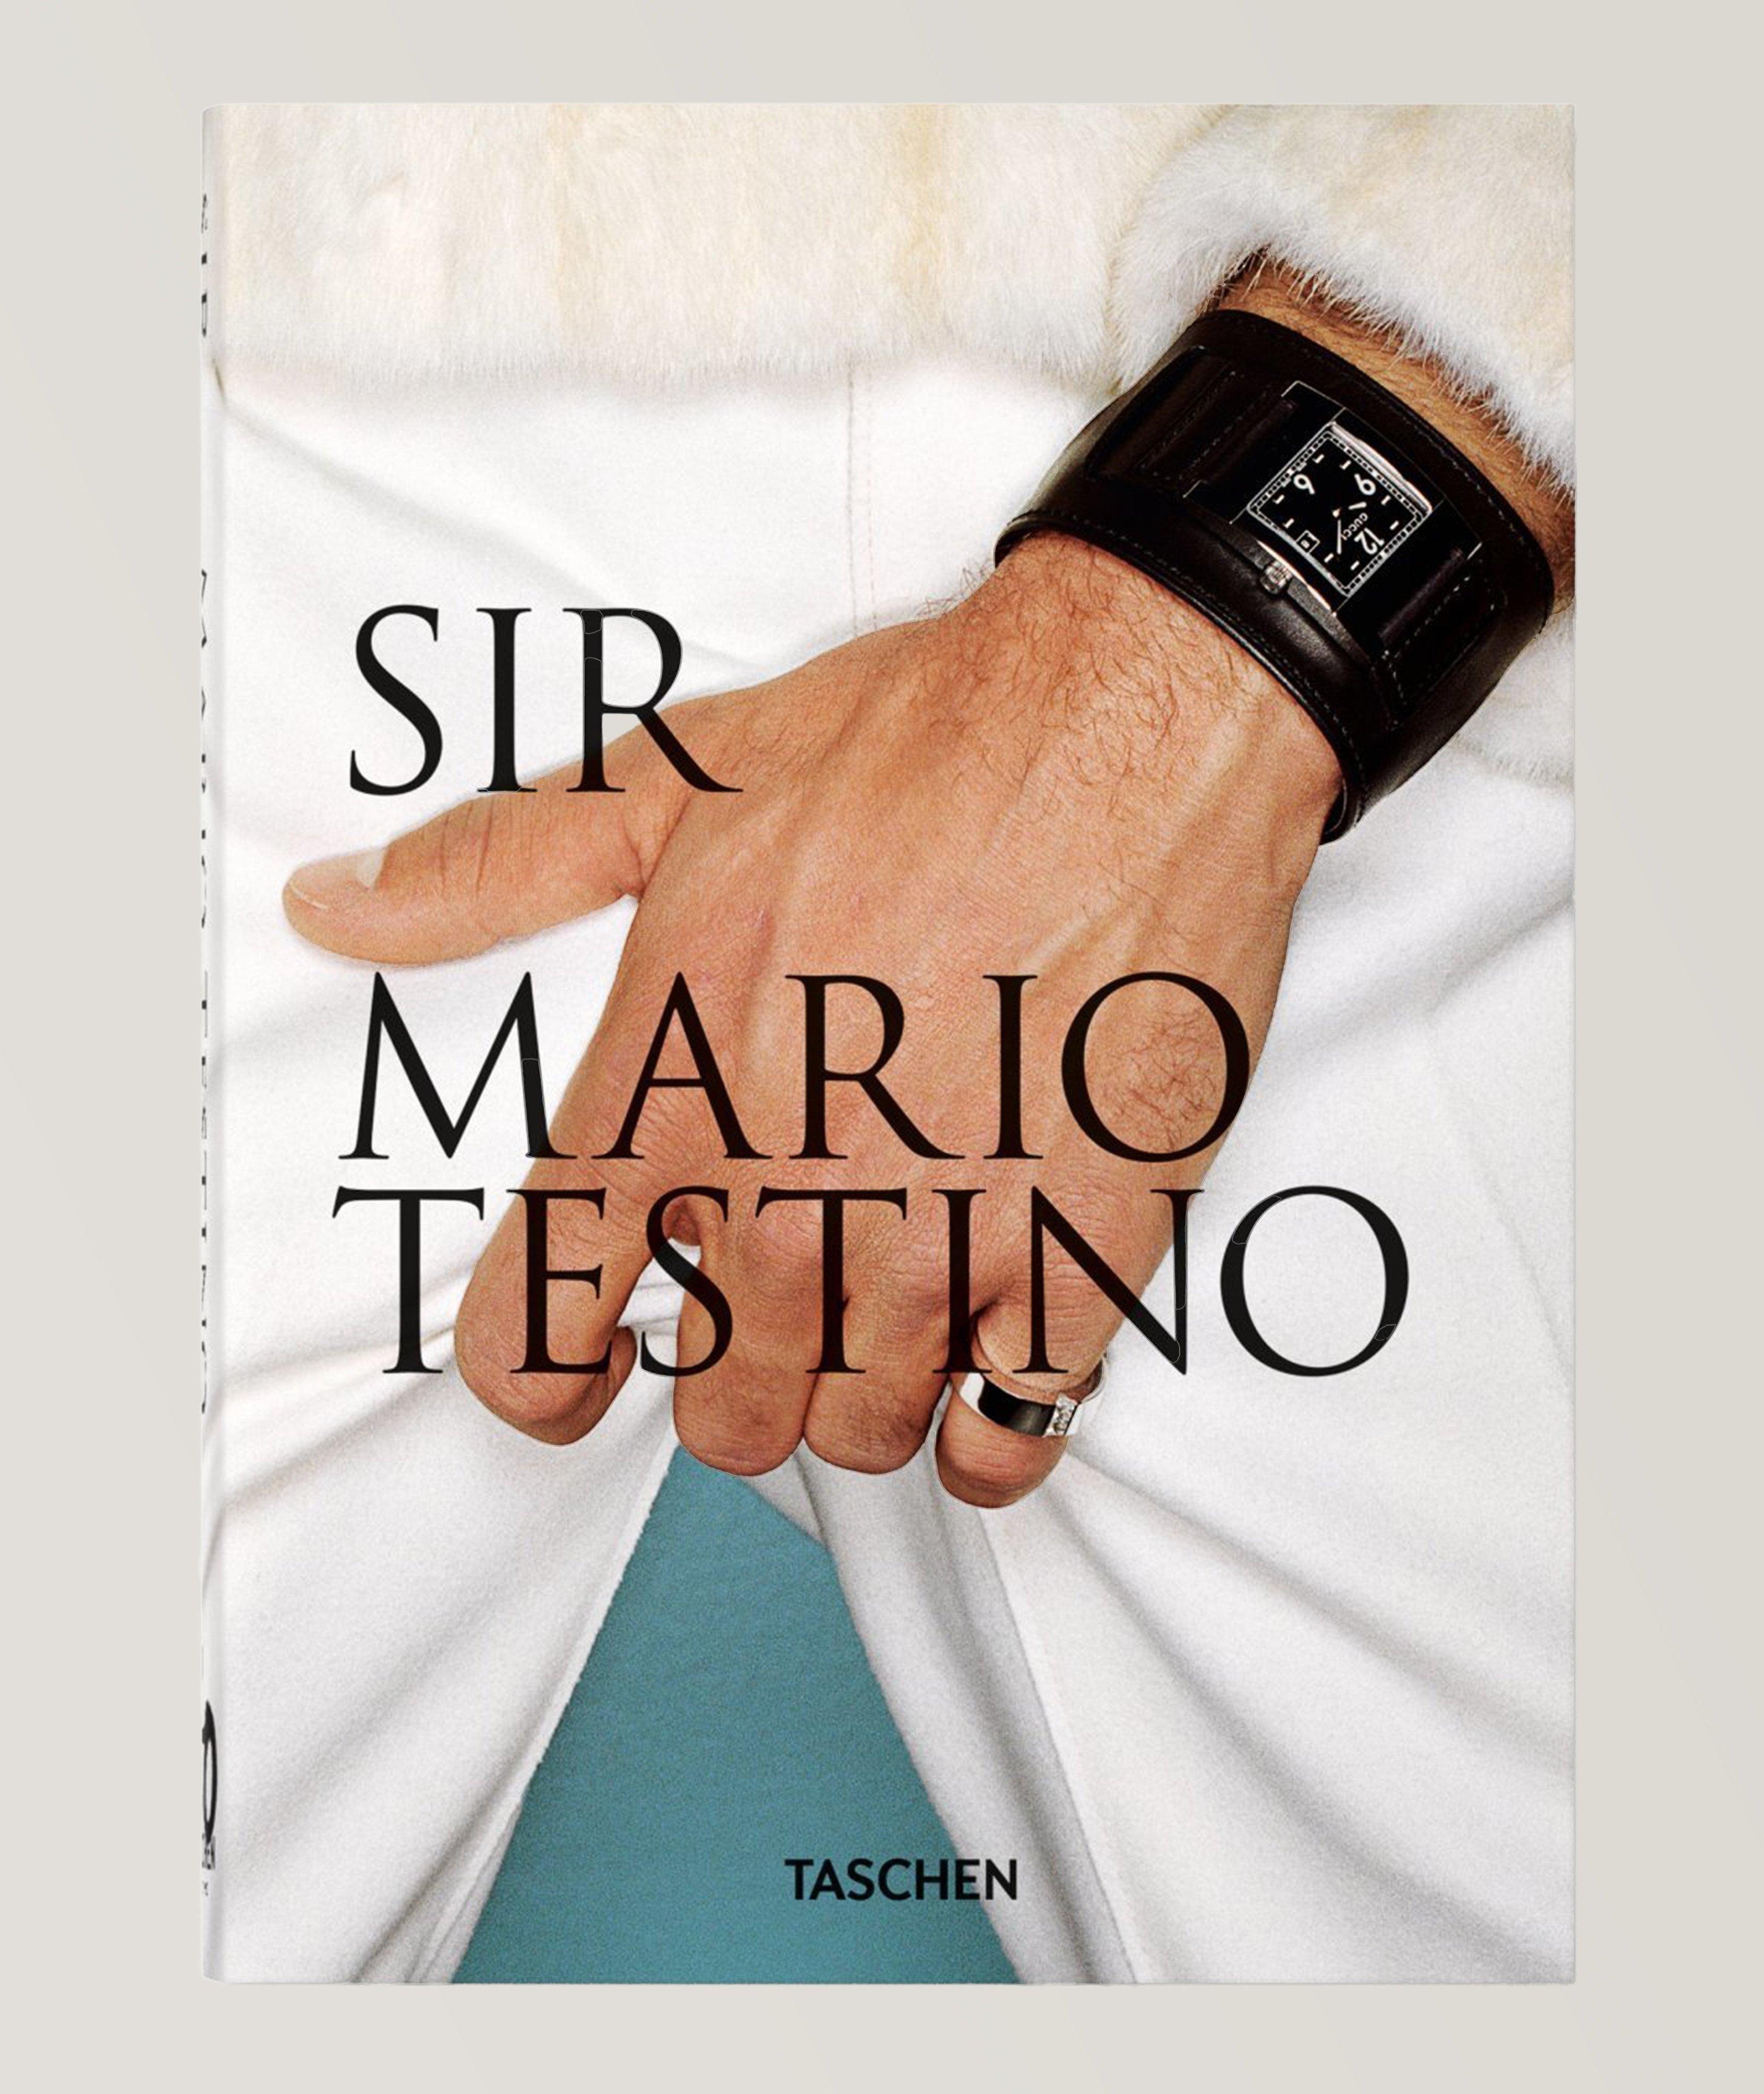 Livre « SIR : Mario Testino », édition anniversaire image 0